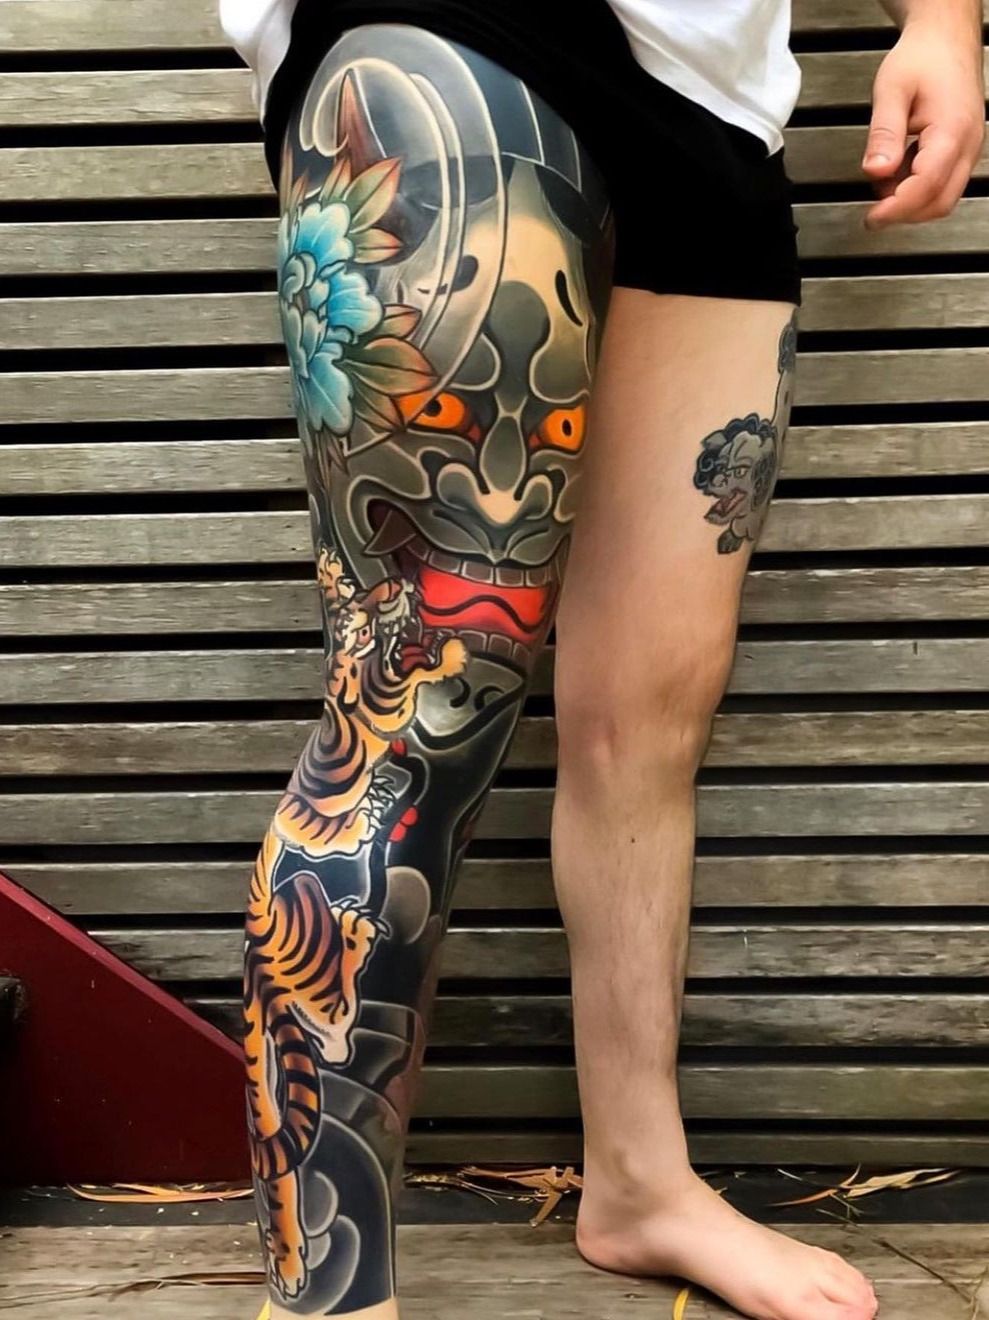 Leg Tattoo Sun and Moon by peachytattoos on DeviantArt